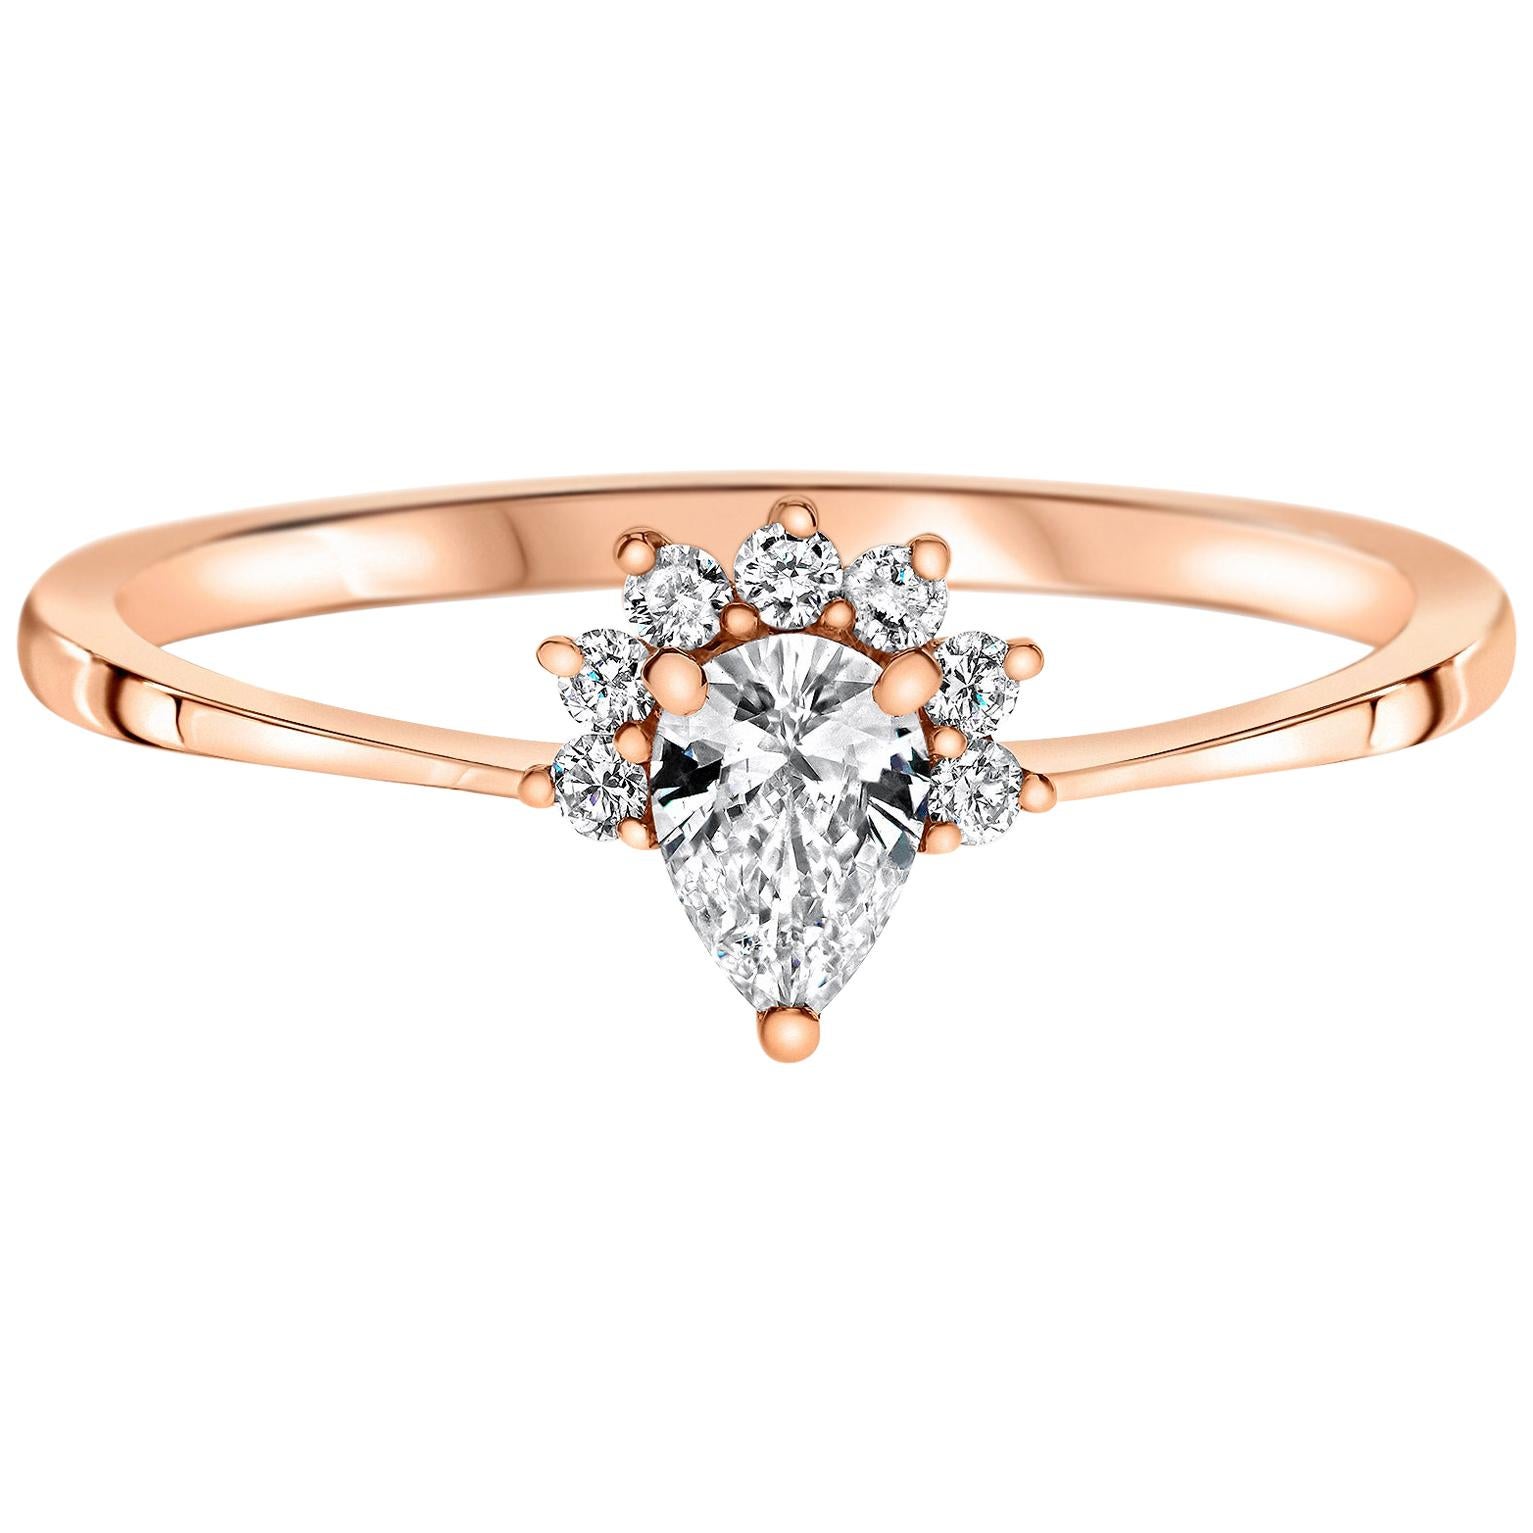 0.23 Carat Pear & Round Cut Diamonds Crown Ring 14k Rose Gold - Shlomit Rogel For Sale